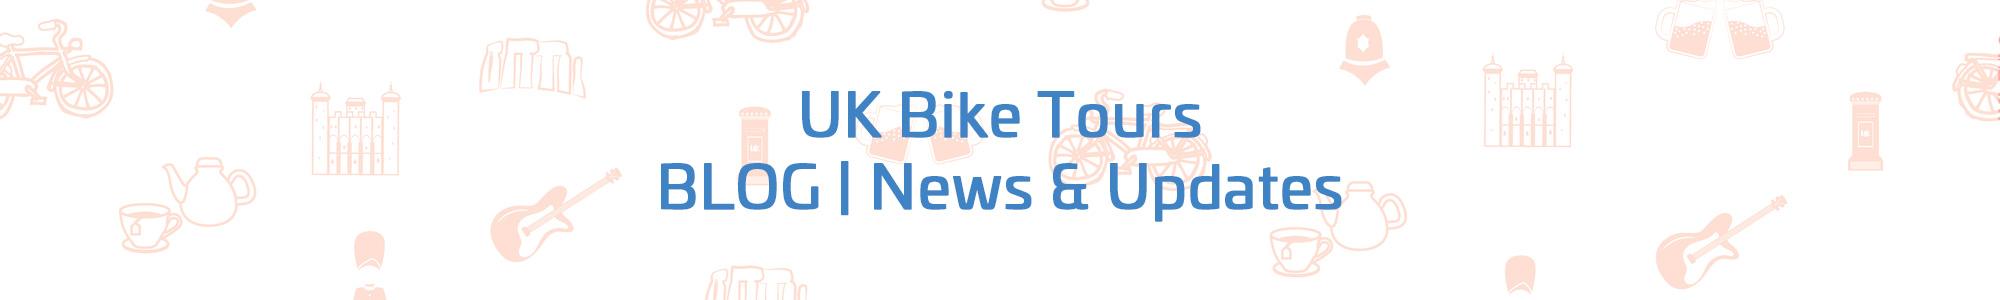 UK Bike Tours Blog | News & Updates